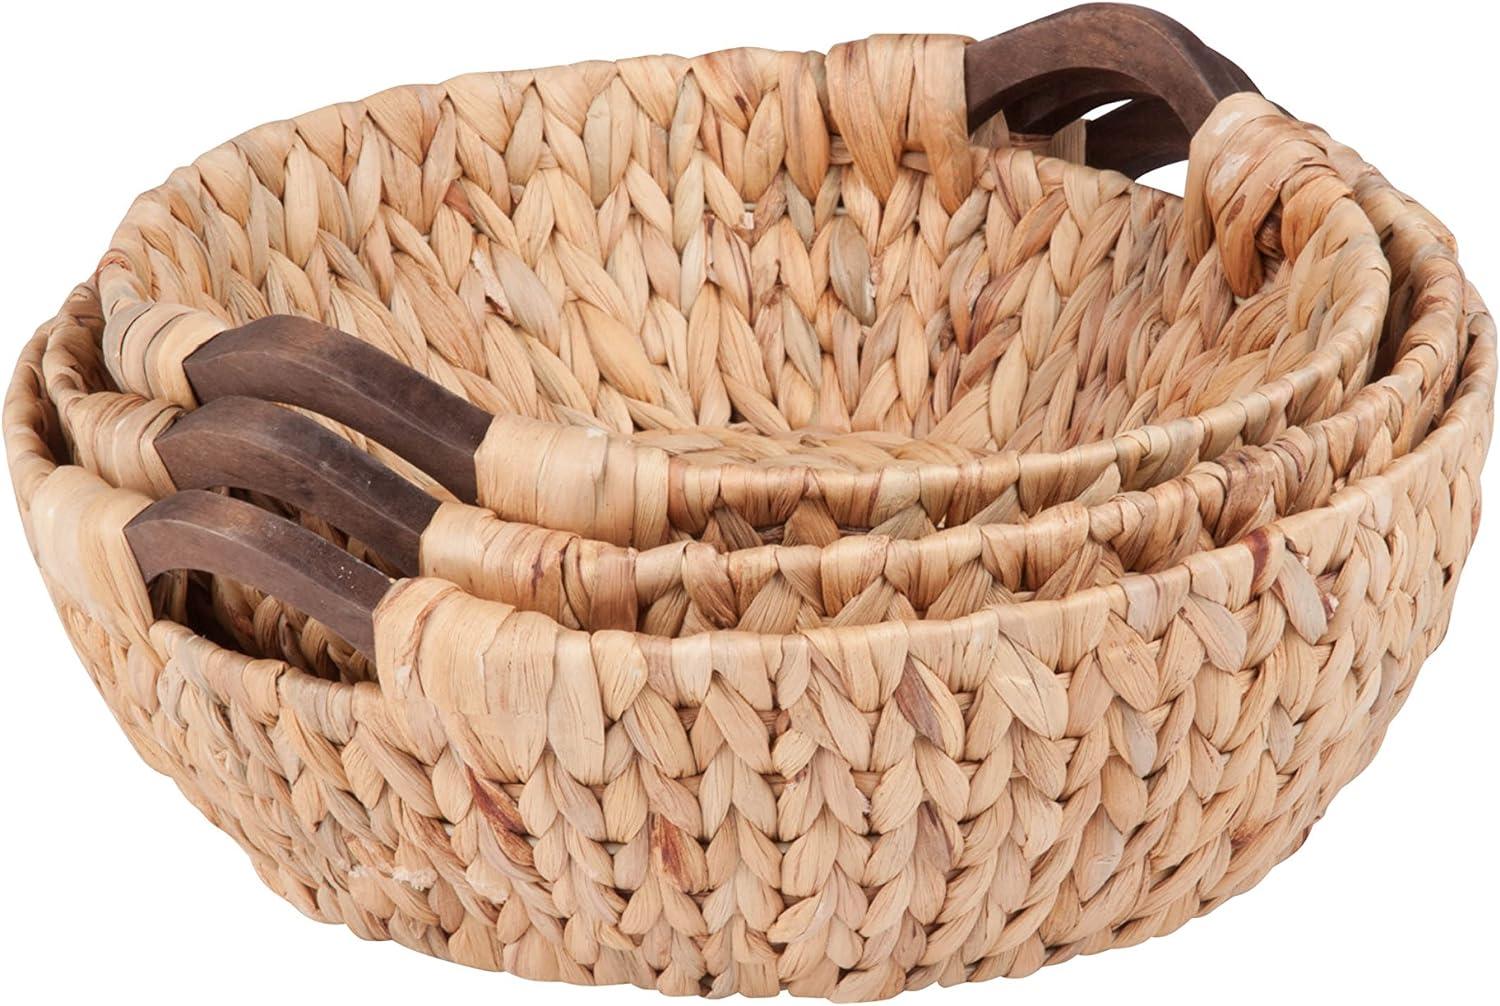 Natural Brown Water Hyacinth Round Wicker Storage Basket Set with Wooden Handles